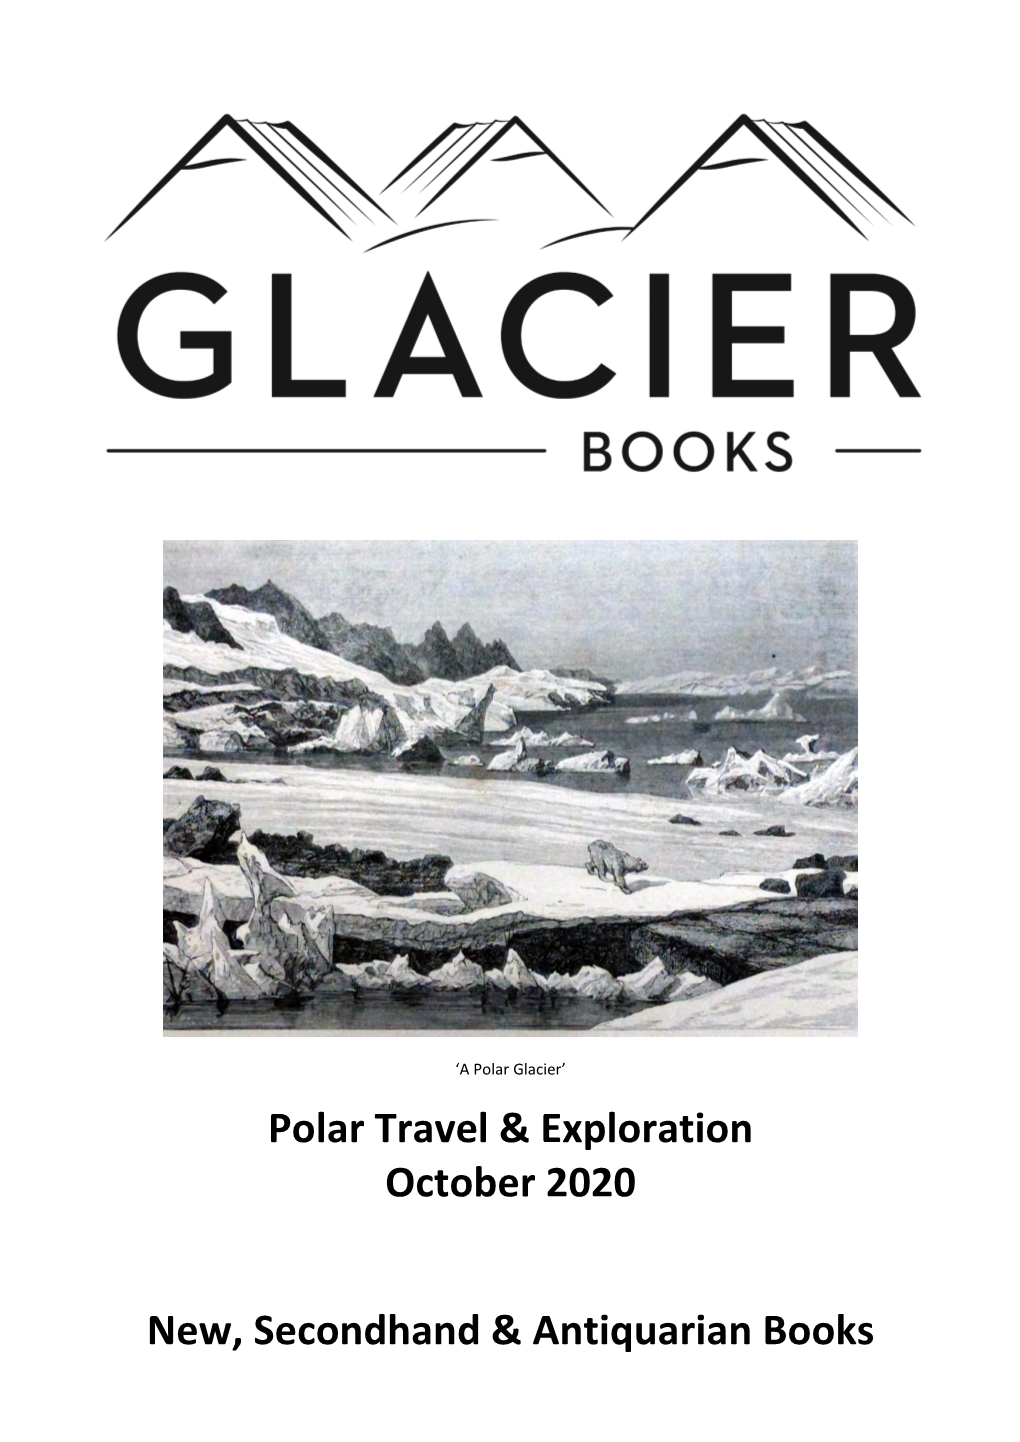 Polar Travel & Exploration October 2020 New